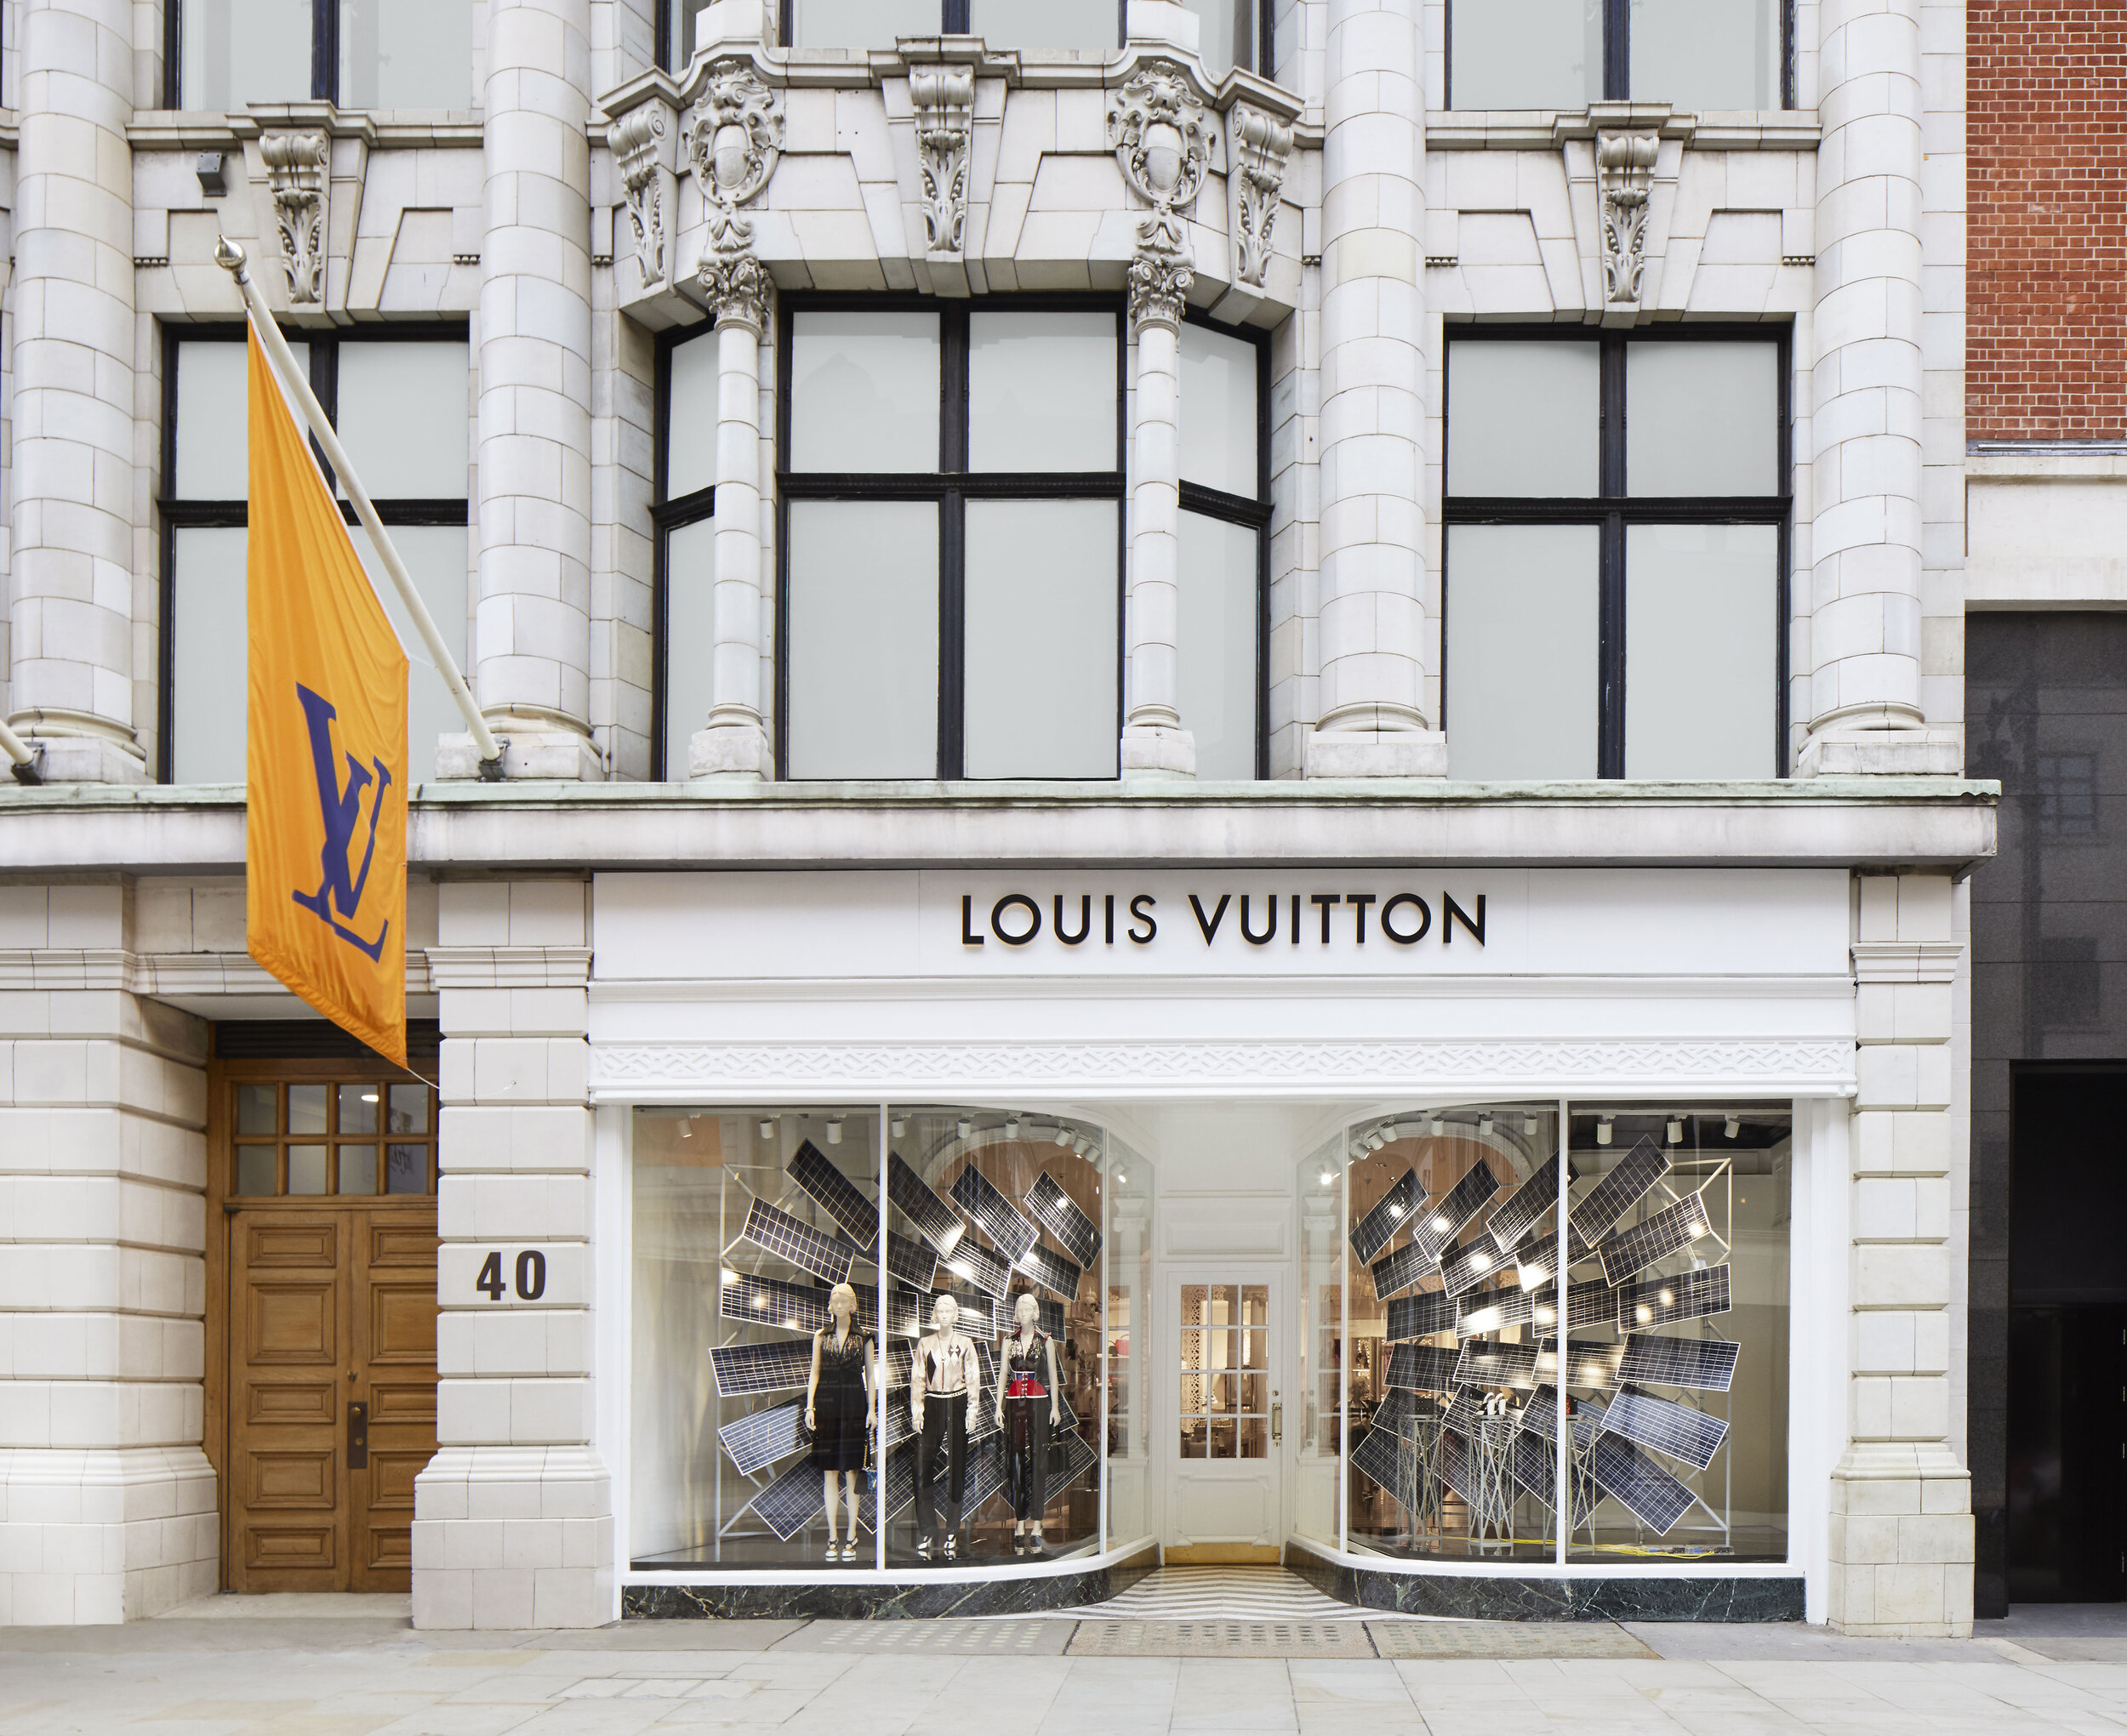 London, UK. 18 Nov 2019. Exterior of LV, Louis Vuitton store on